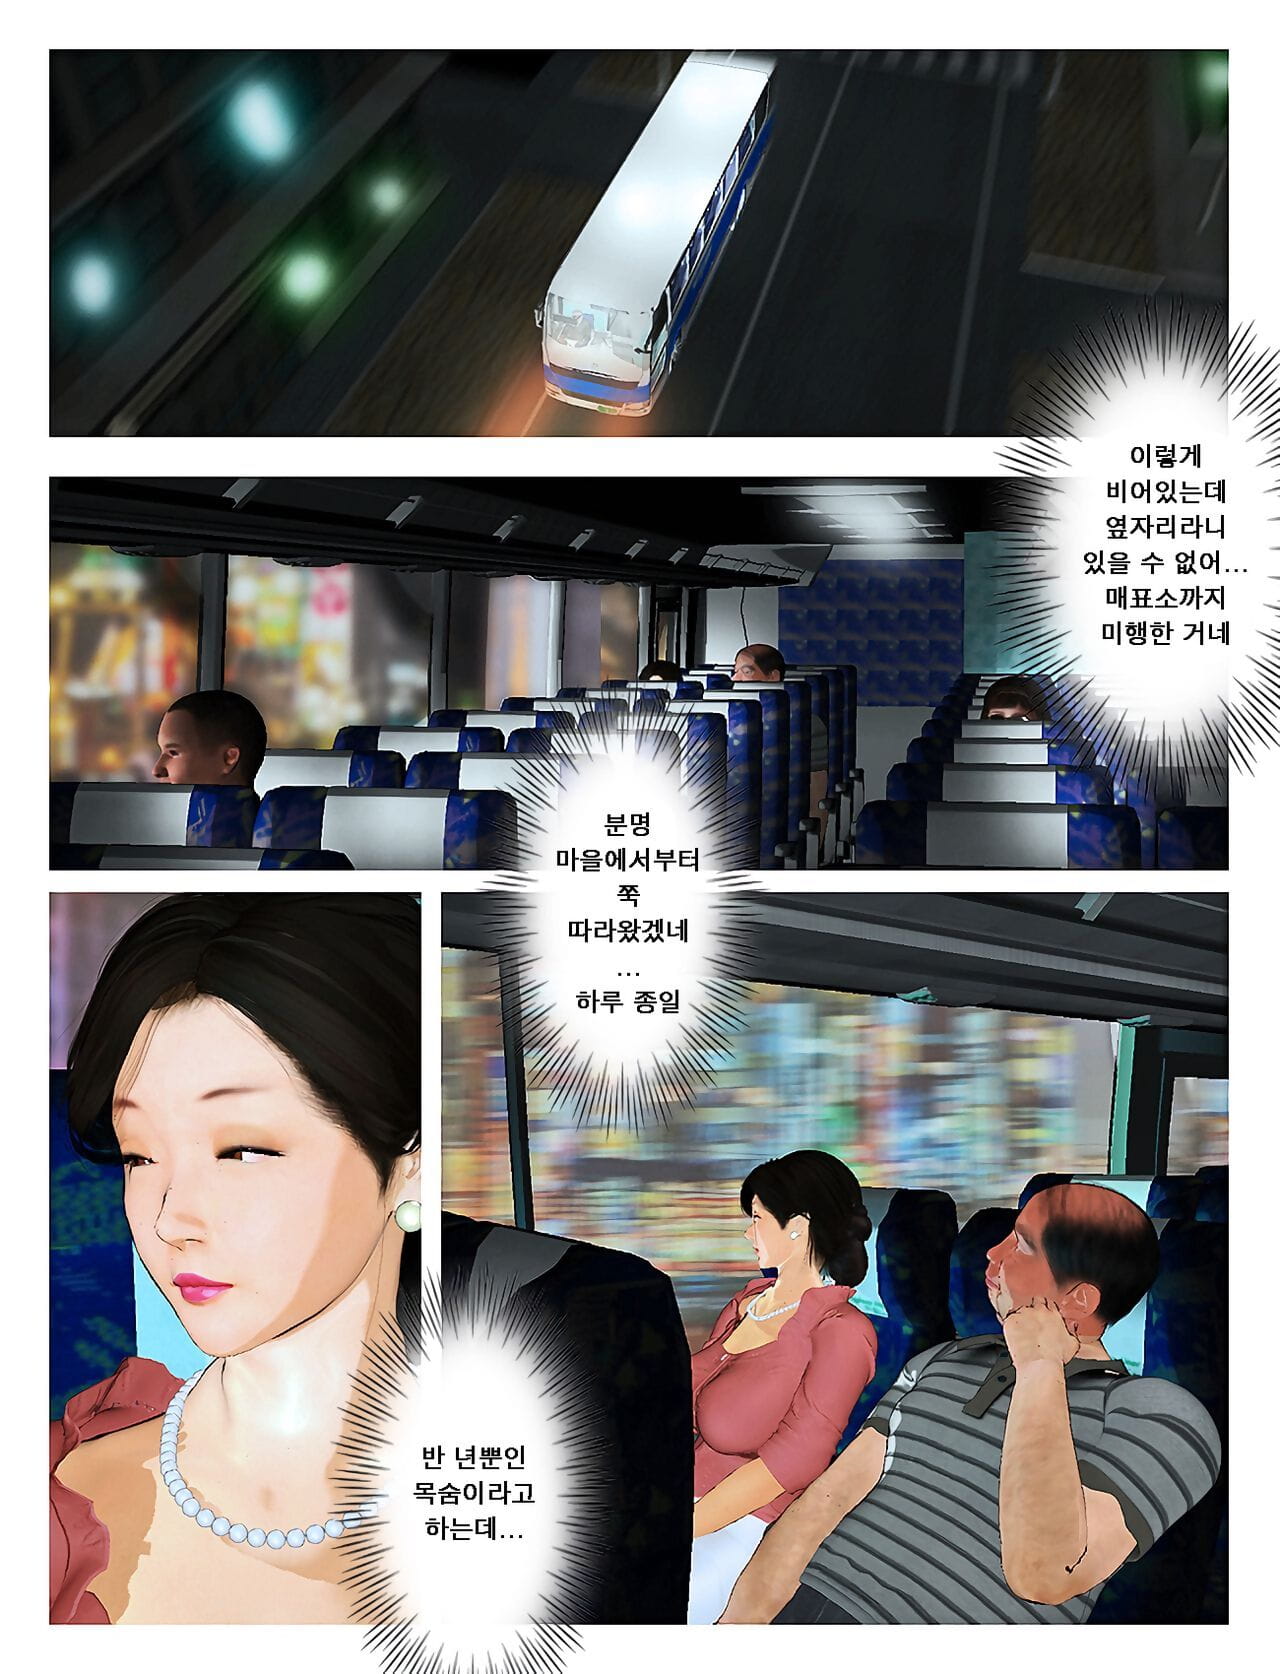 kyou nenhum misako san 2019:2 오늘의 미사코씨 2019:2 page 1